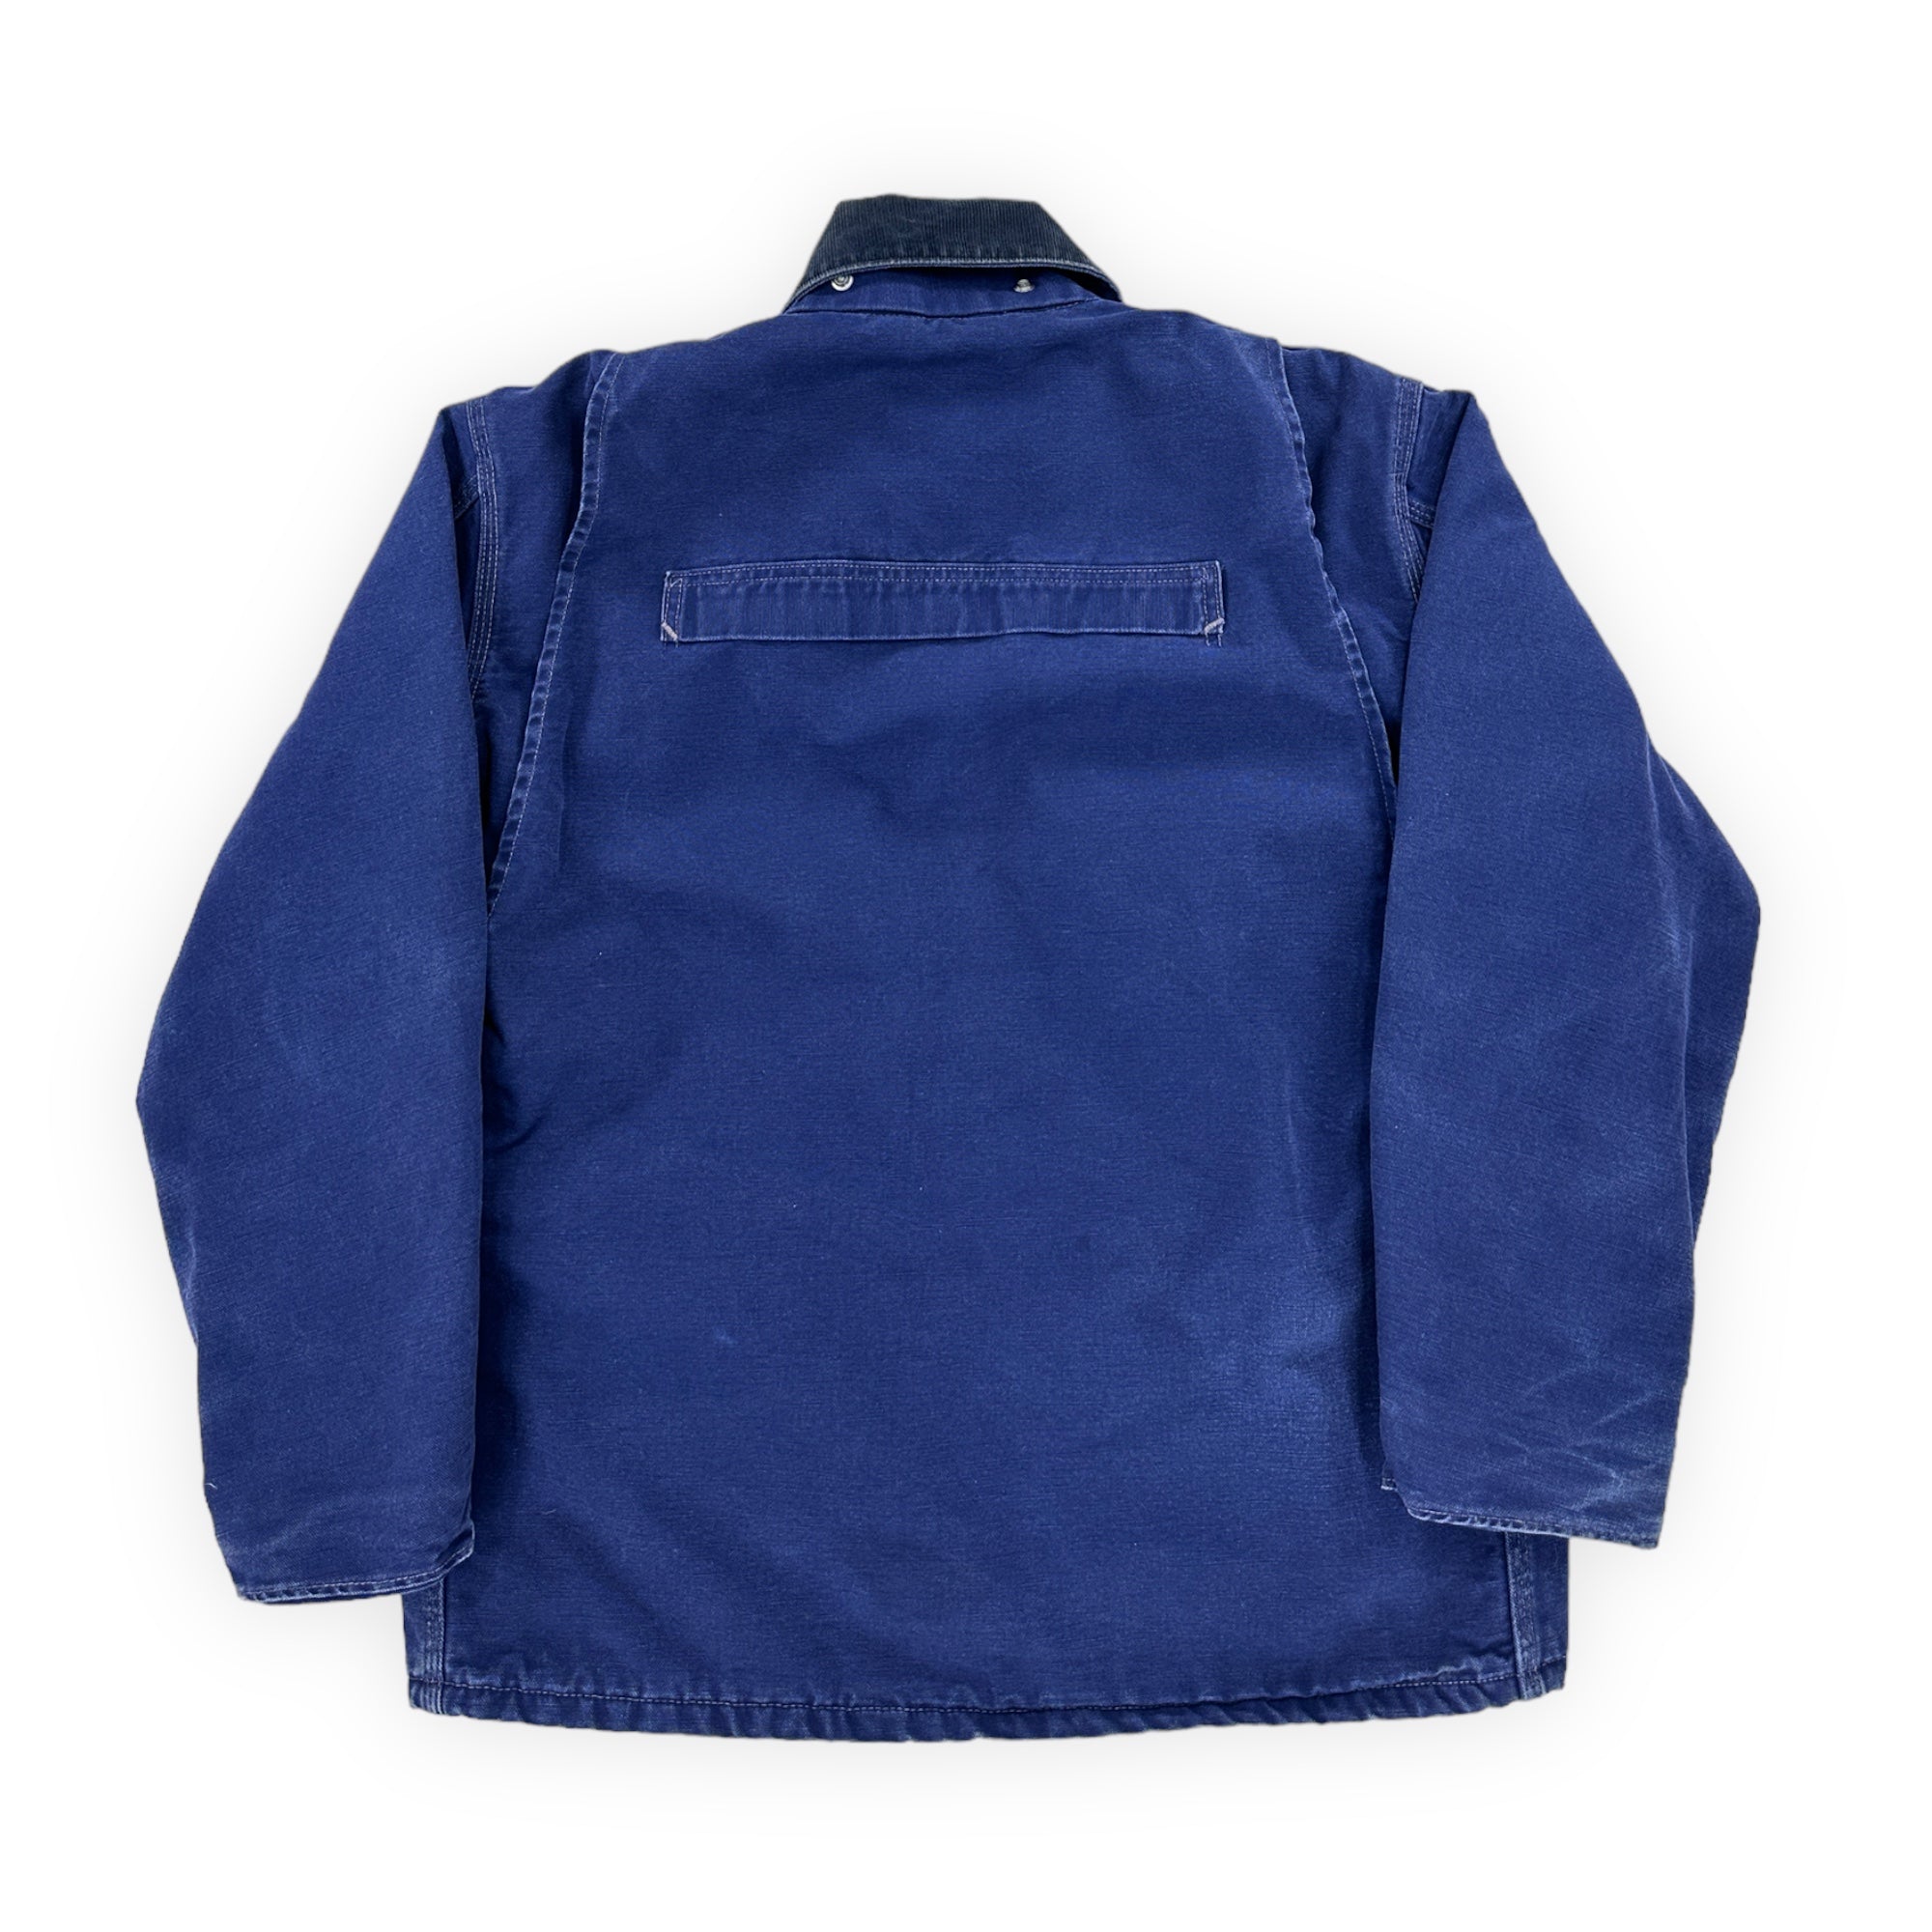 Vintage 90s Carhartt Blanket Lined Jacket - Men's Medium Great Lakes Reclaimed Denim